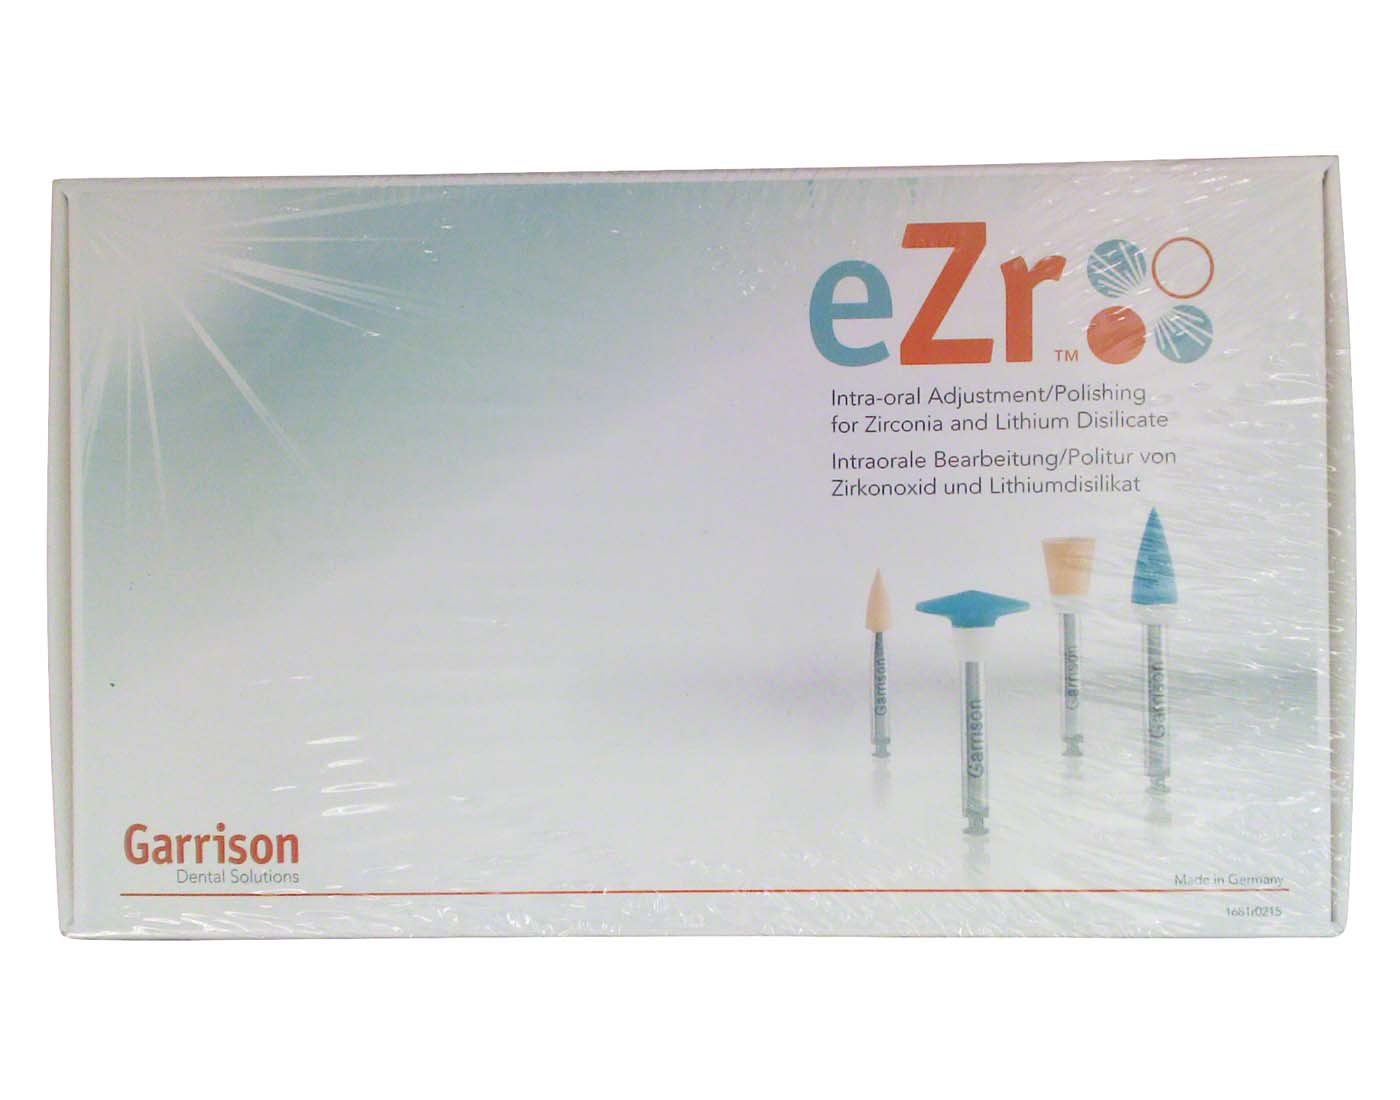 eZr™ Komplett-Systemset Garrison Dental Solutions